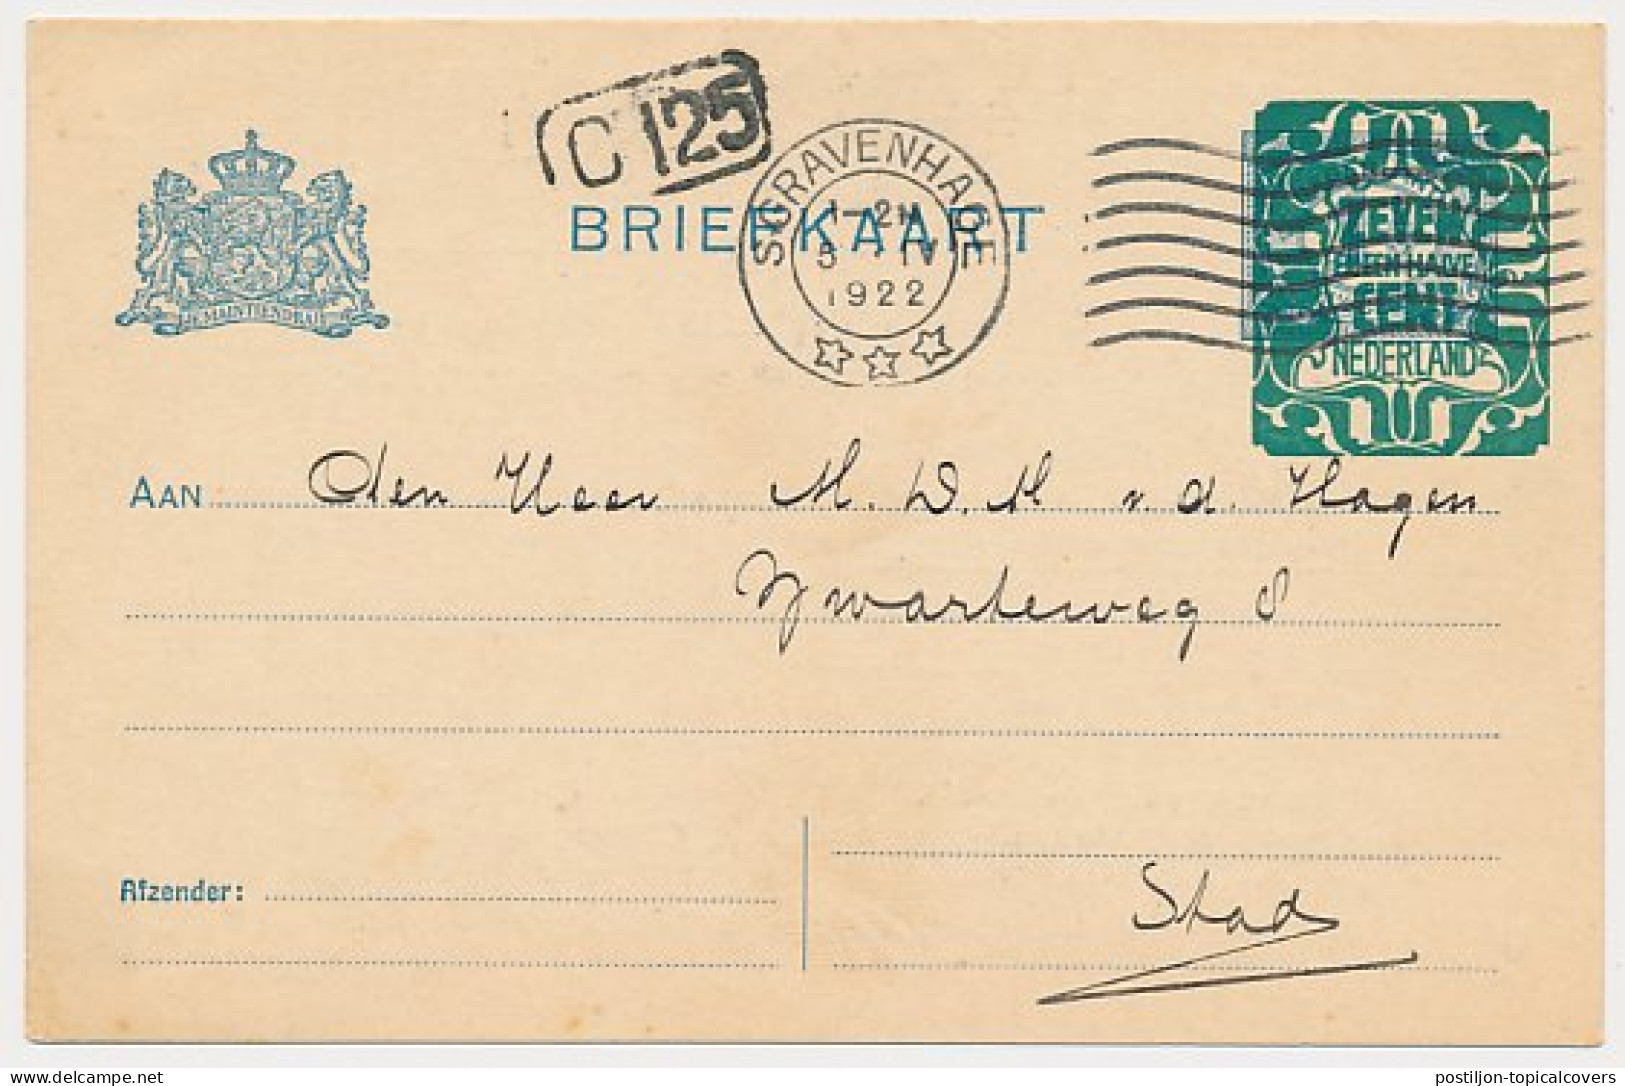 Briefkaart G. DW163-II-a - Duinwaterleiding S-Gravenhage 1922 - Postal Stationery